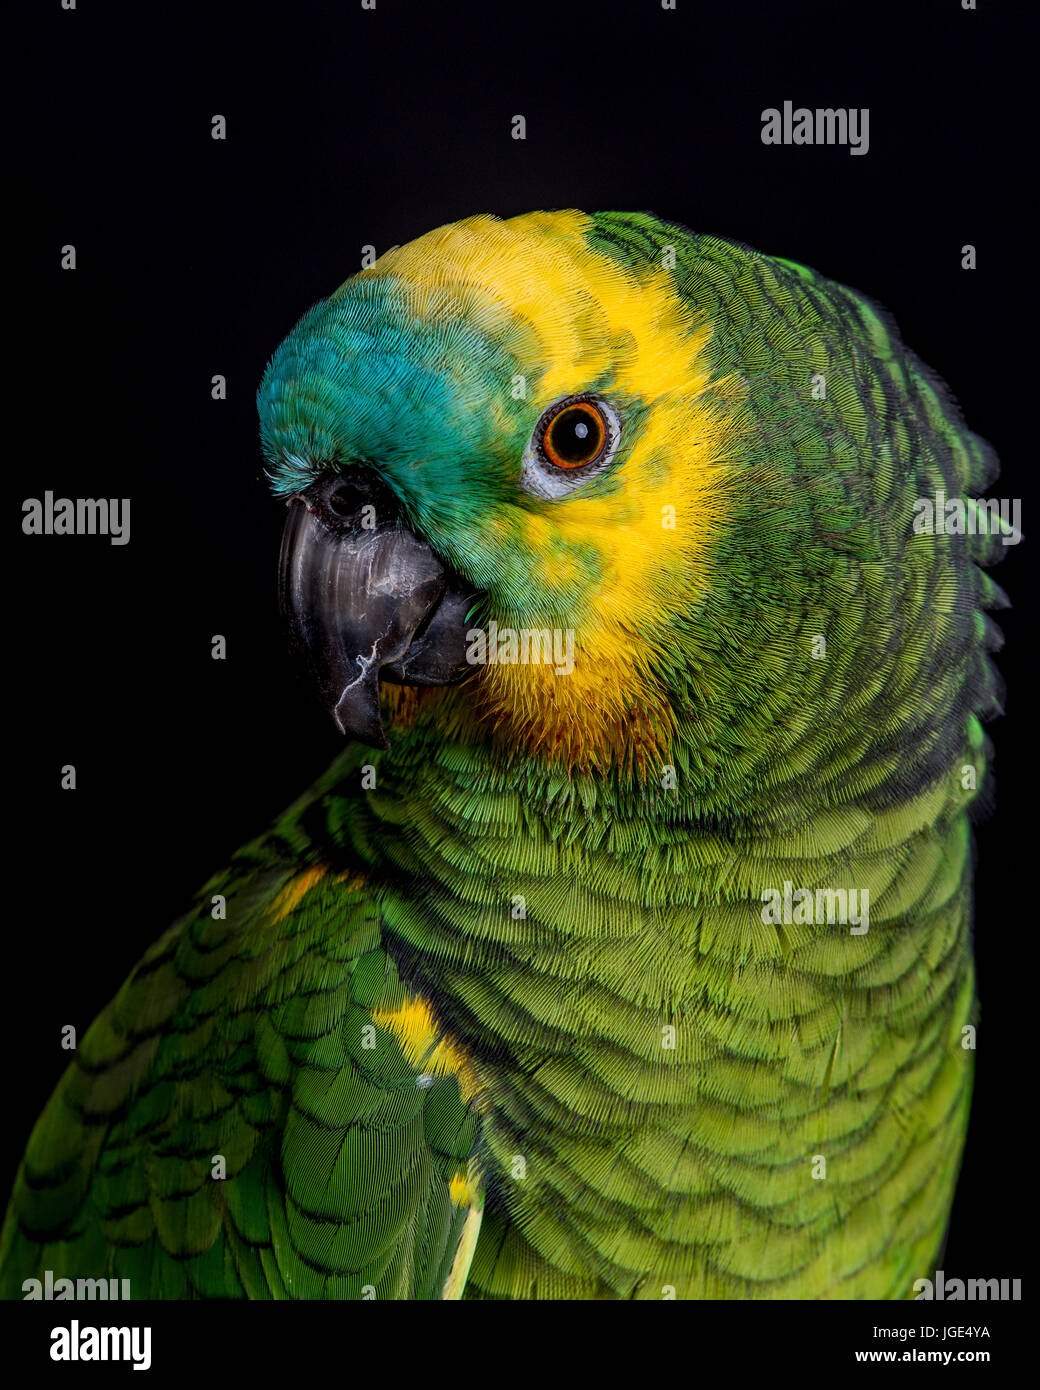 Portrait of colorful parrot Stock Photo